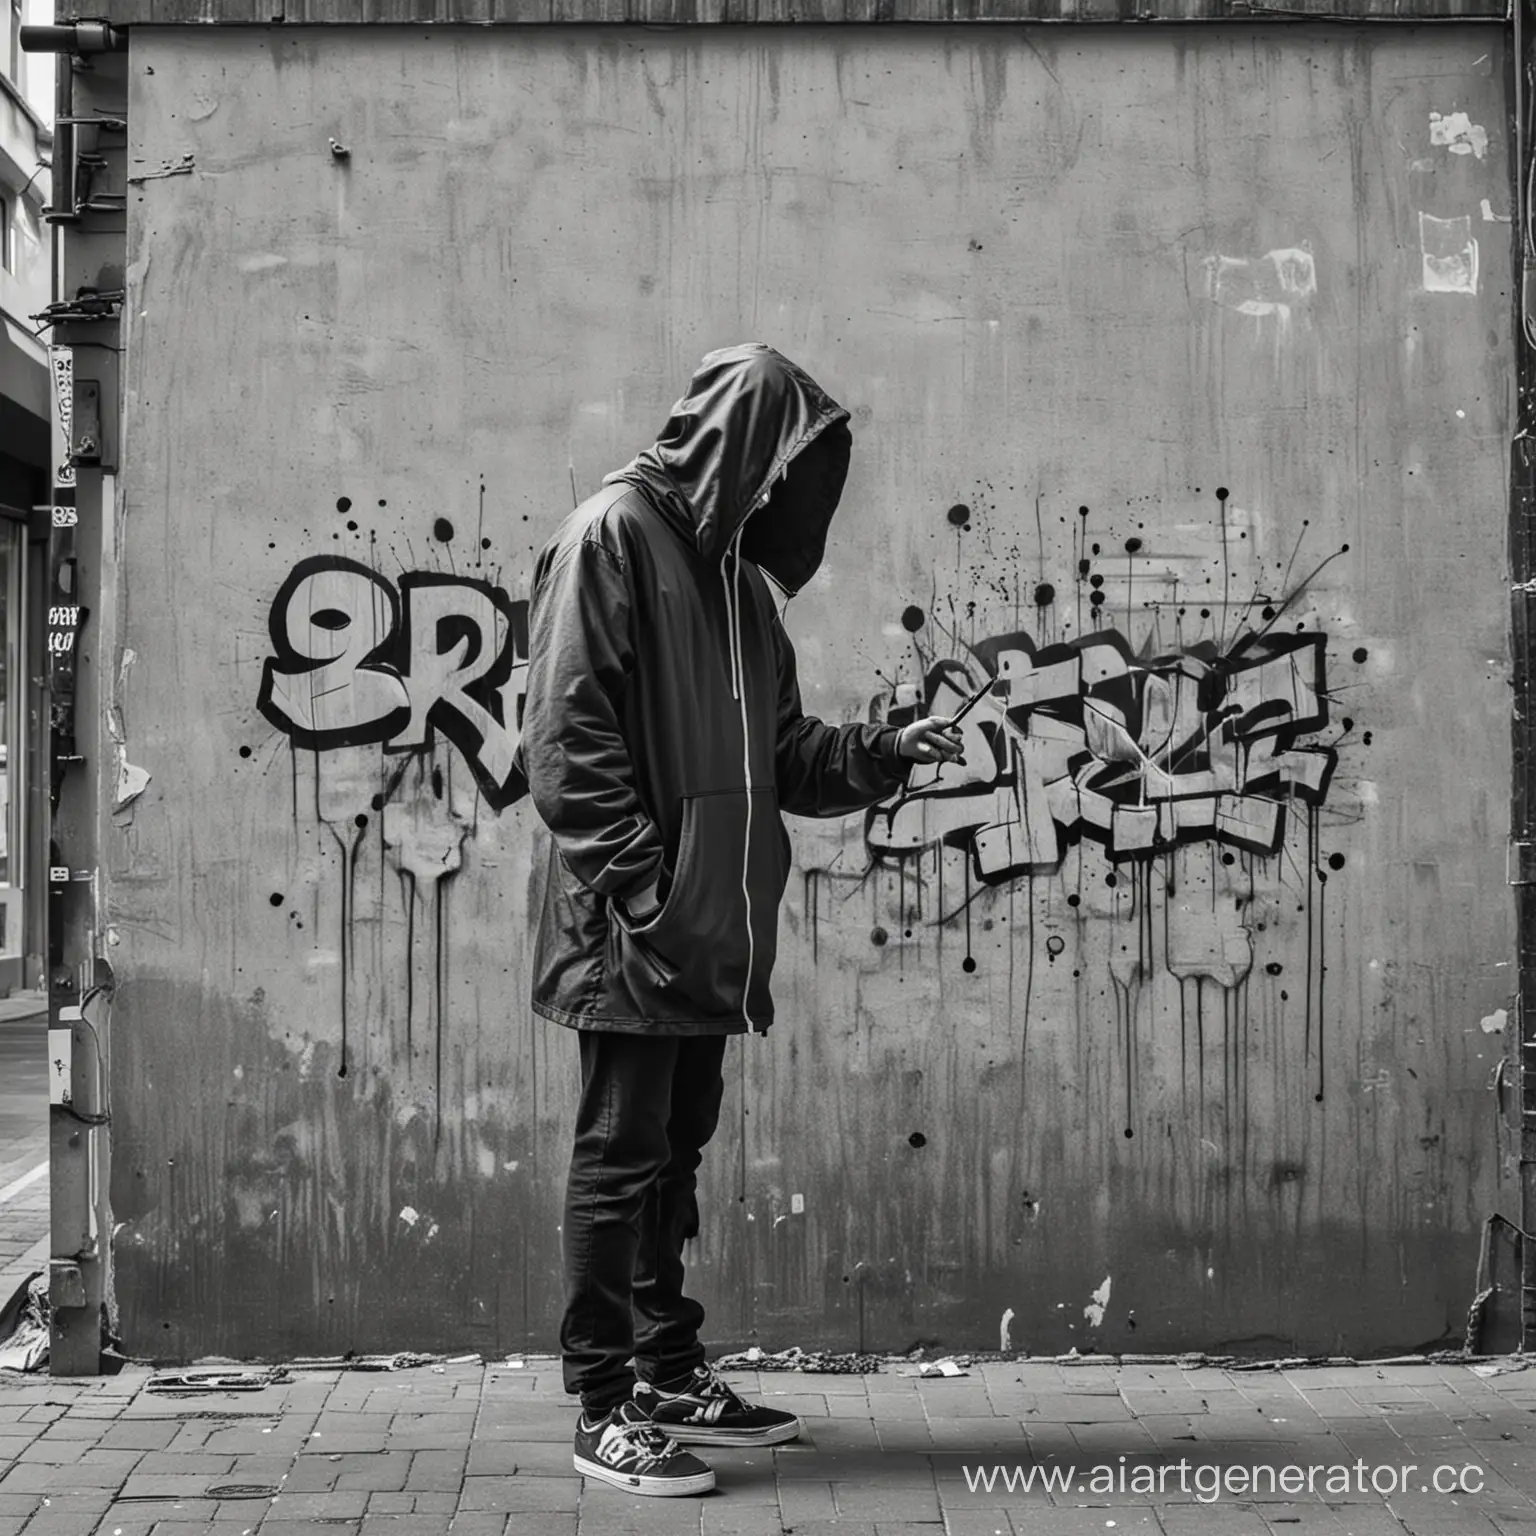 Hooded-Graffiti-Artist-Creating-Urban-Advertisement